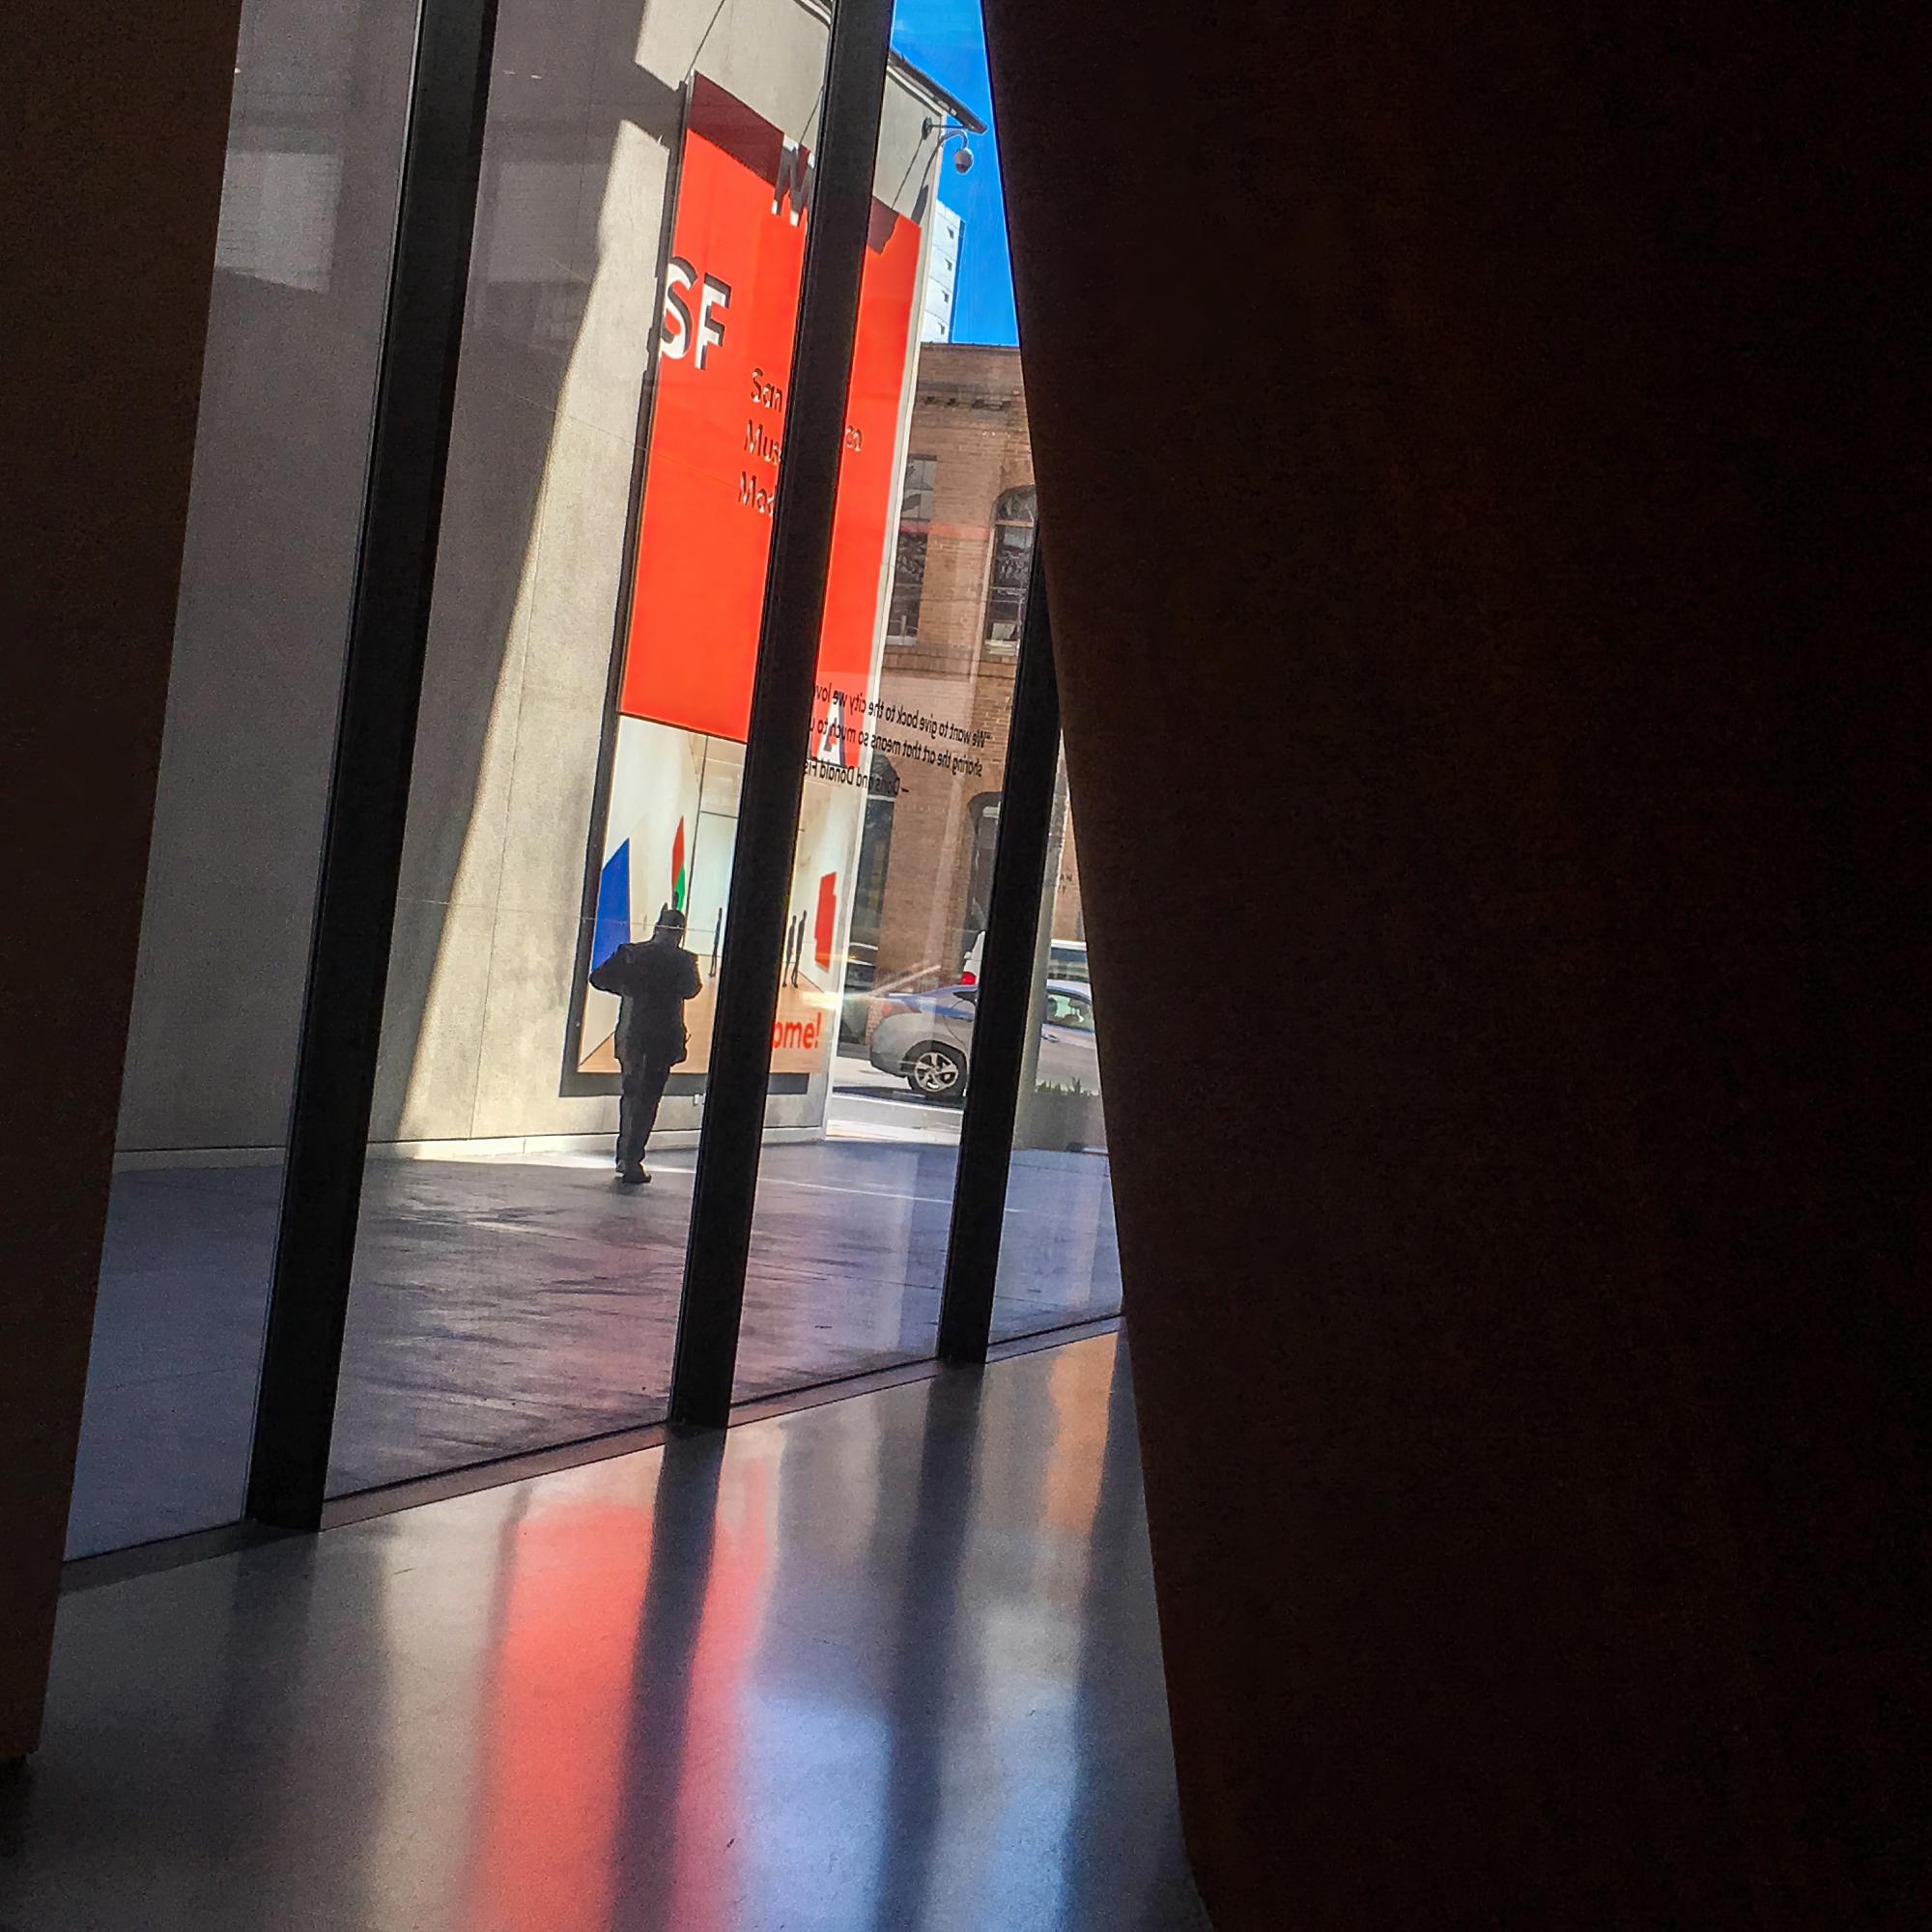 Viewing Art - Dark Shadows dominate at the San Francisco Museum of Art....